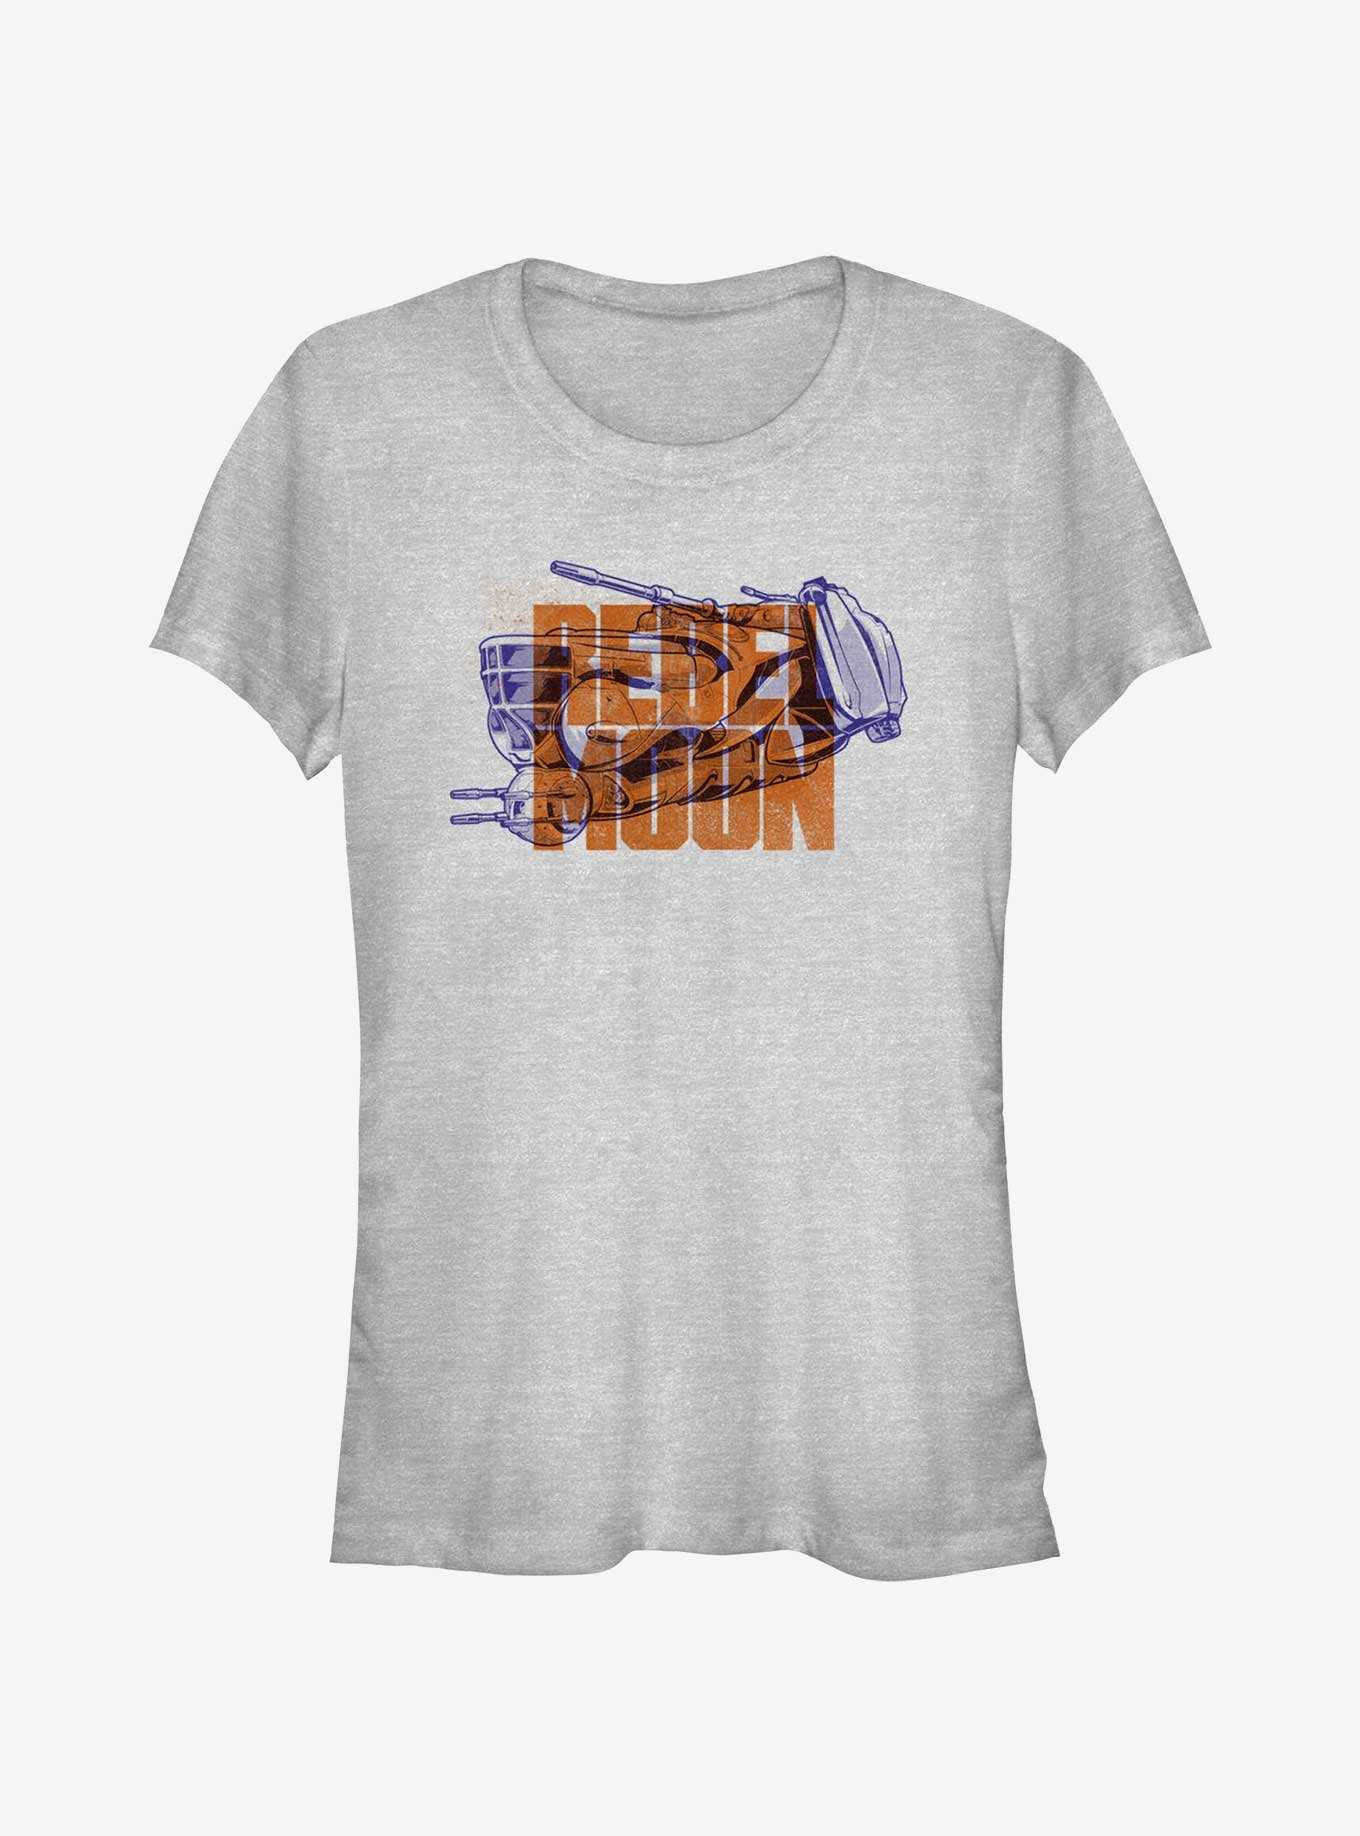 Rebel Moon Graphic Girls T-Shirt, , hi-res